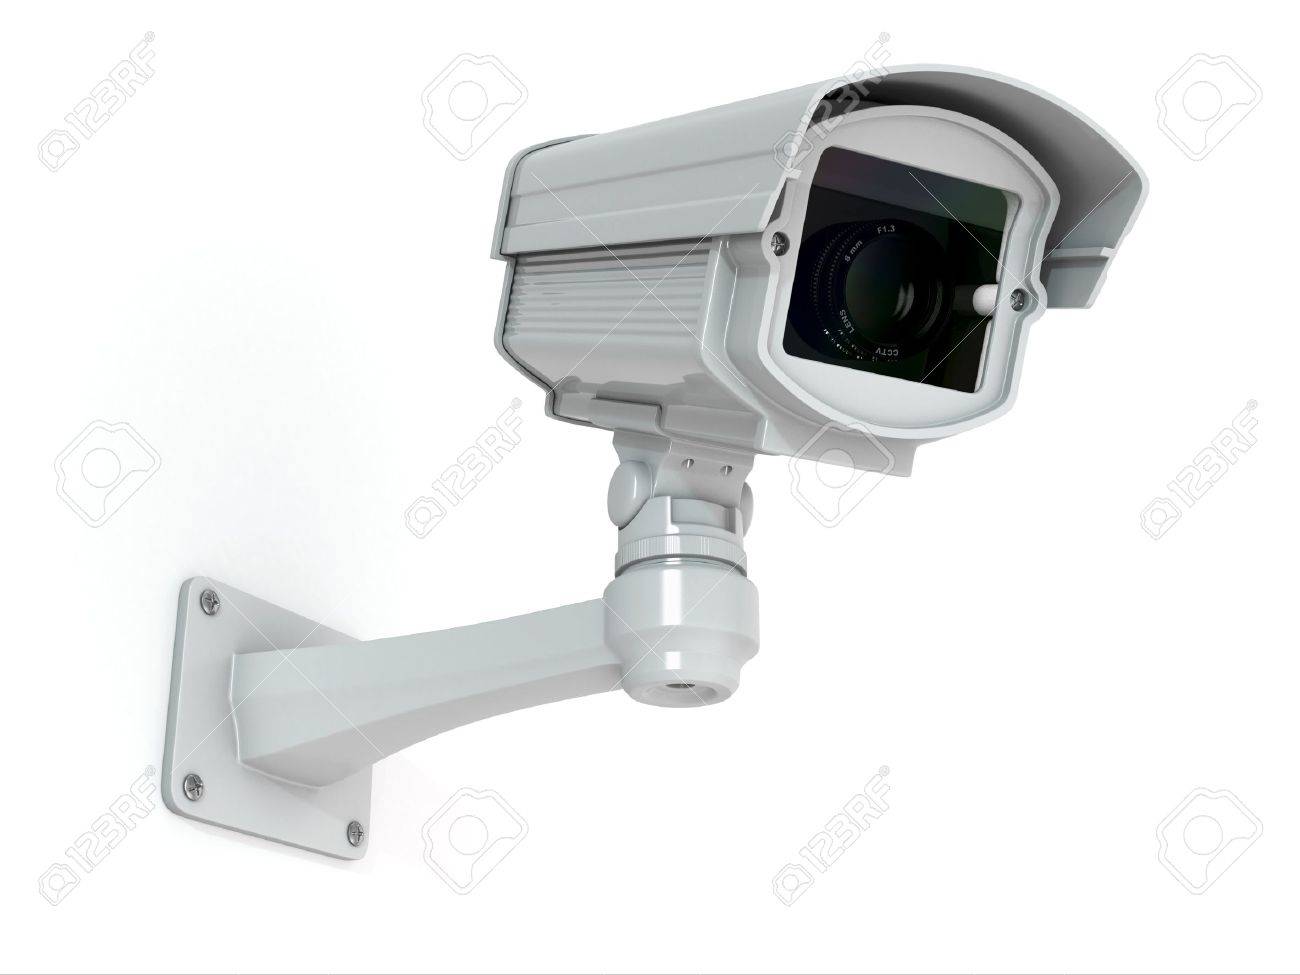 Why Go for CCTV Cameras Now